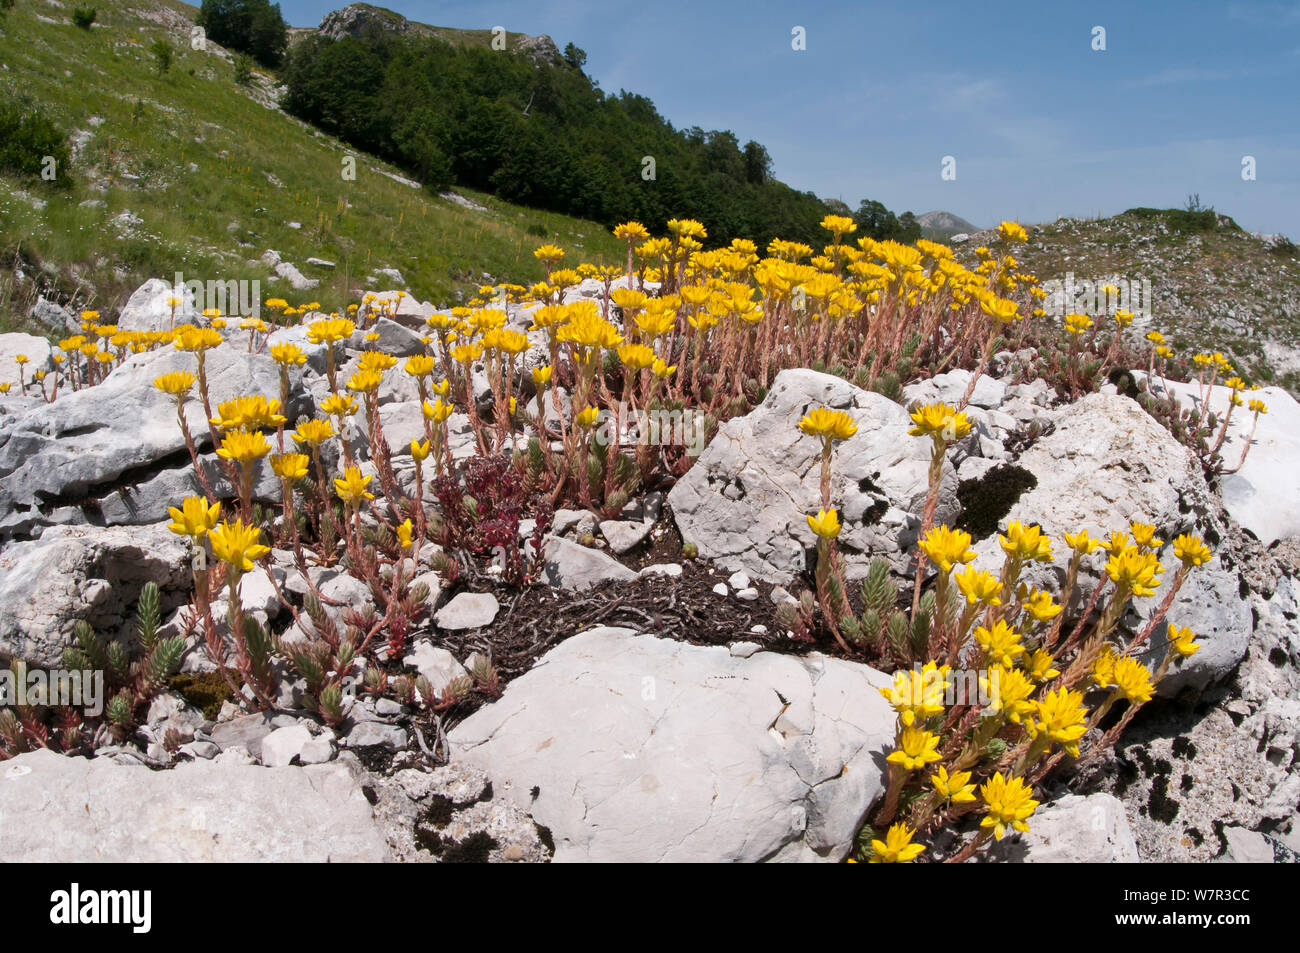 Rock stonecrop (Sedum rupestre) in flower, Mount Terminillo, Rieti, Lazio, Italy Stock Photo